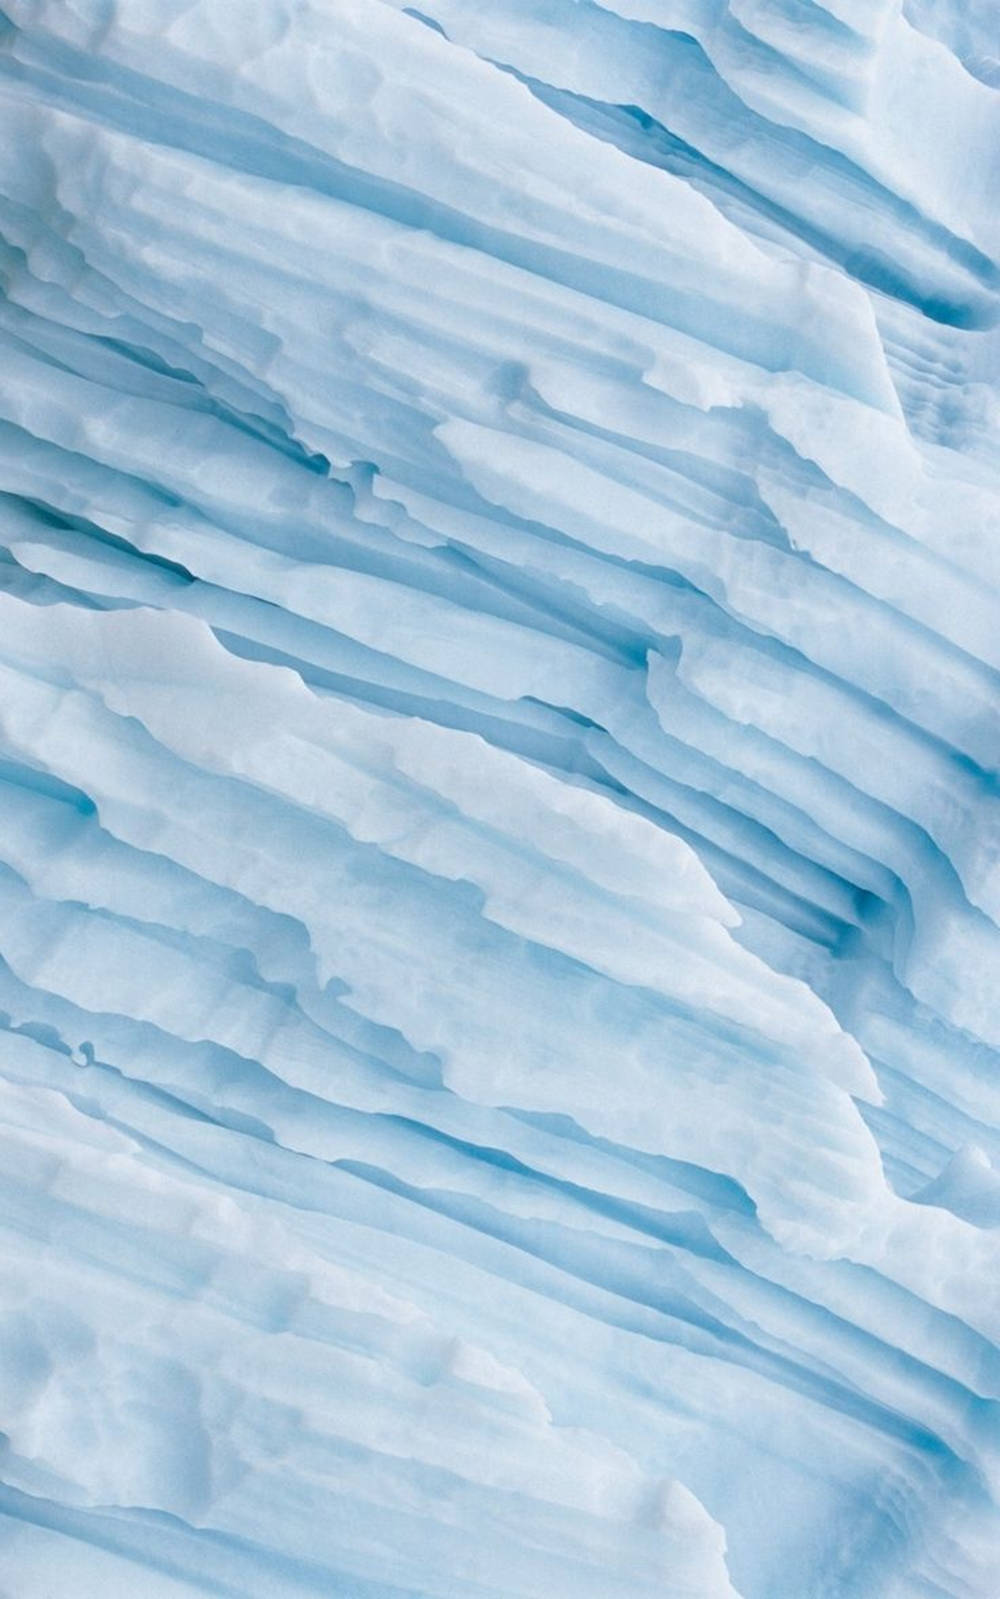 Textured Ice Sheet Blue Aesthetic Tumblr Wallpaper